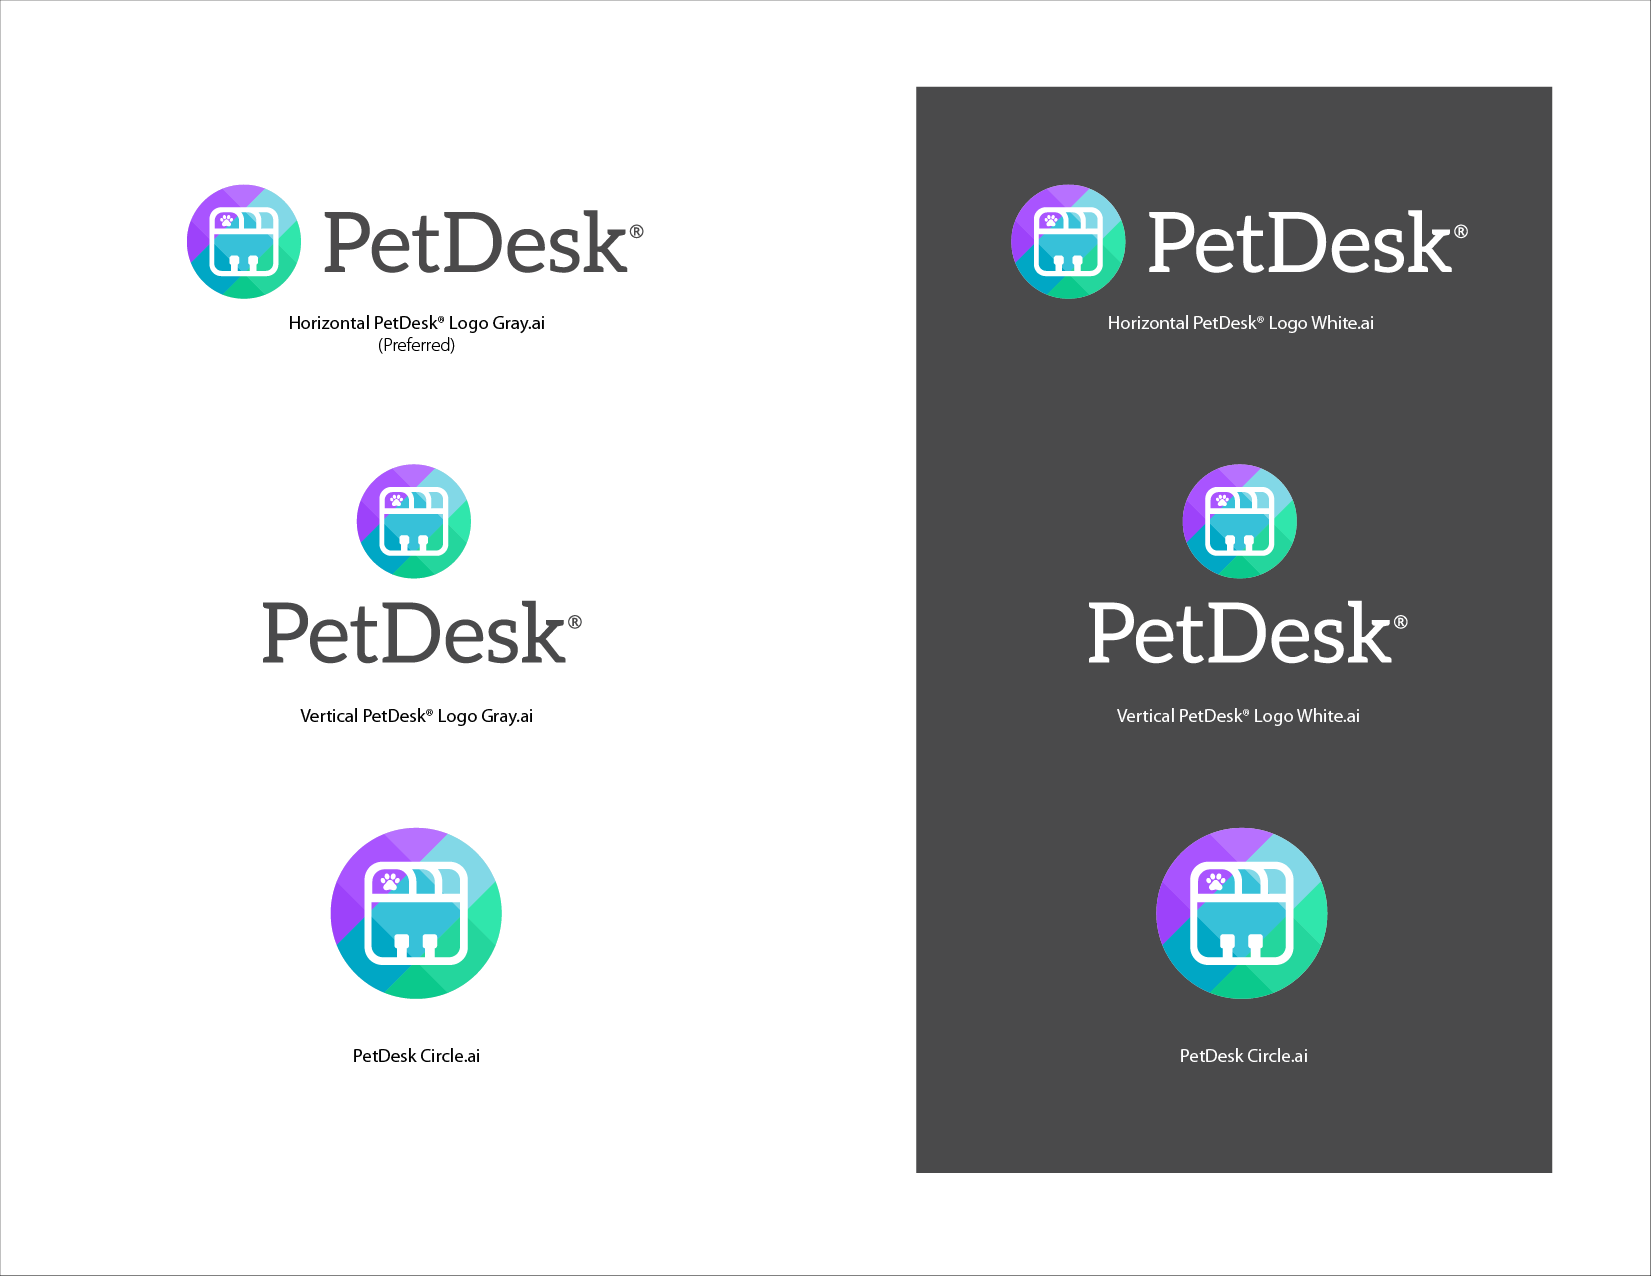 PetDesk Logo